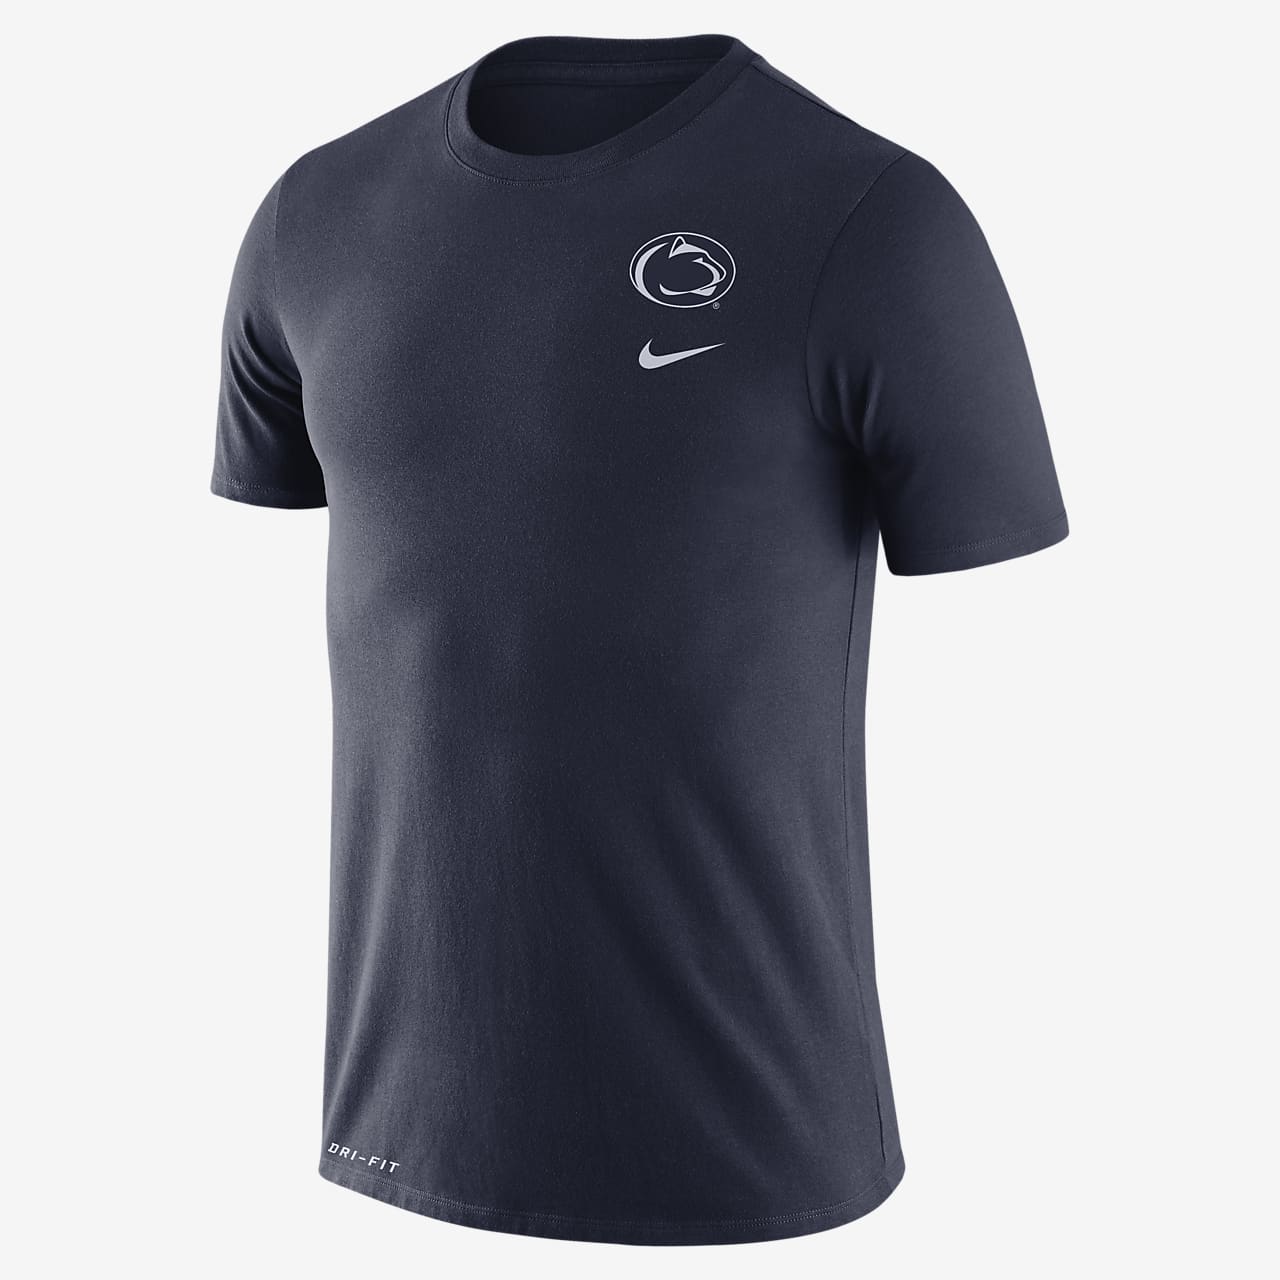 Men's Nike Dri fit sweatshirt- Black - Campus Tees